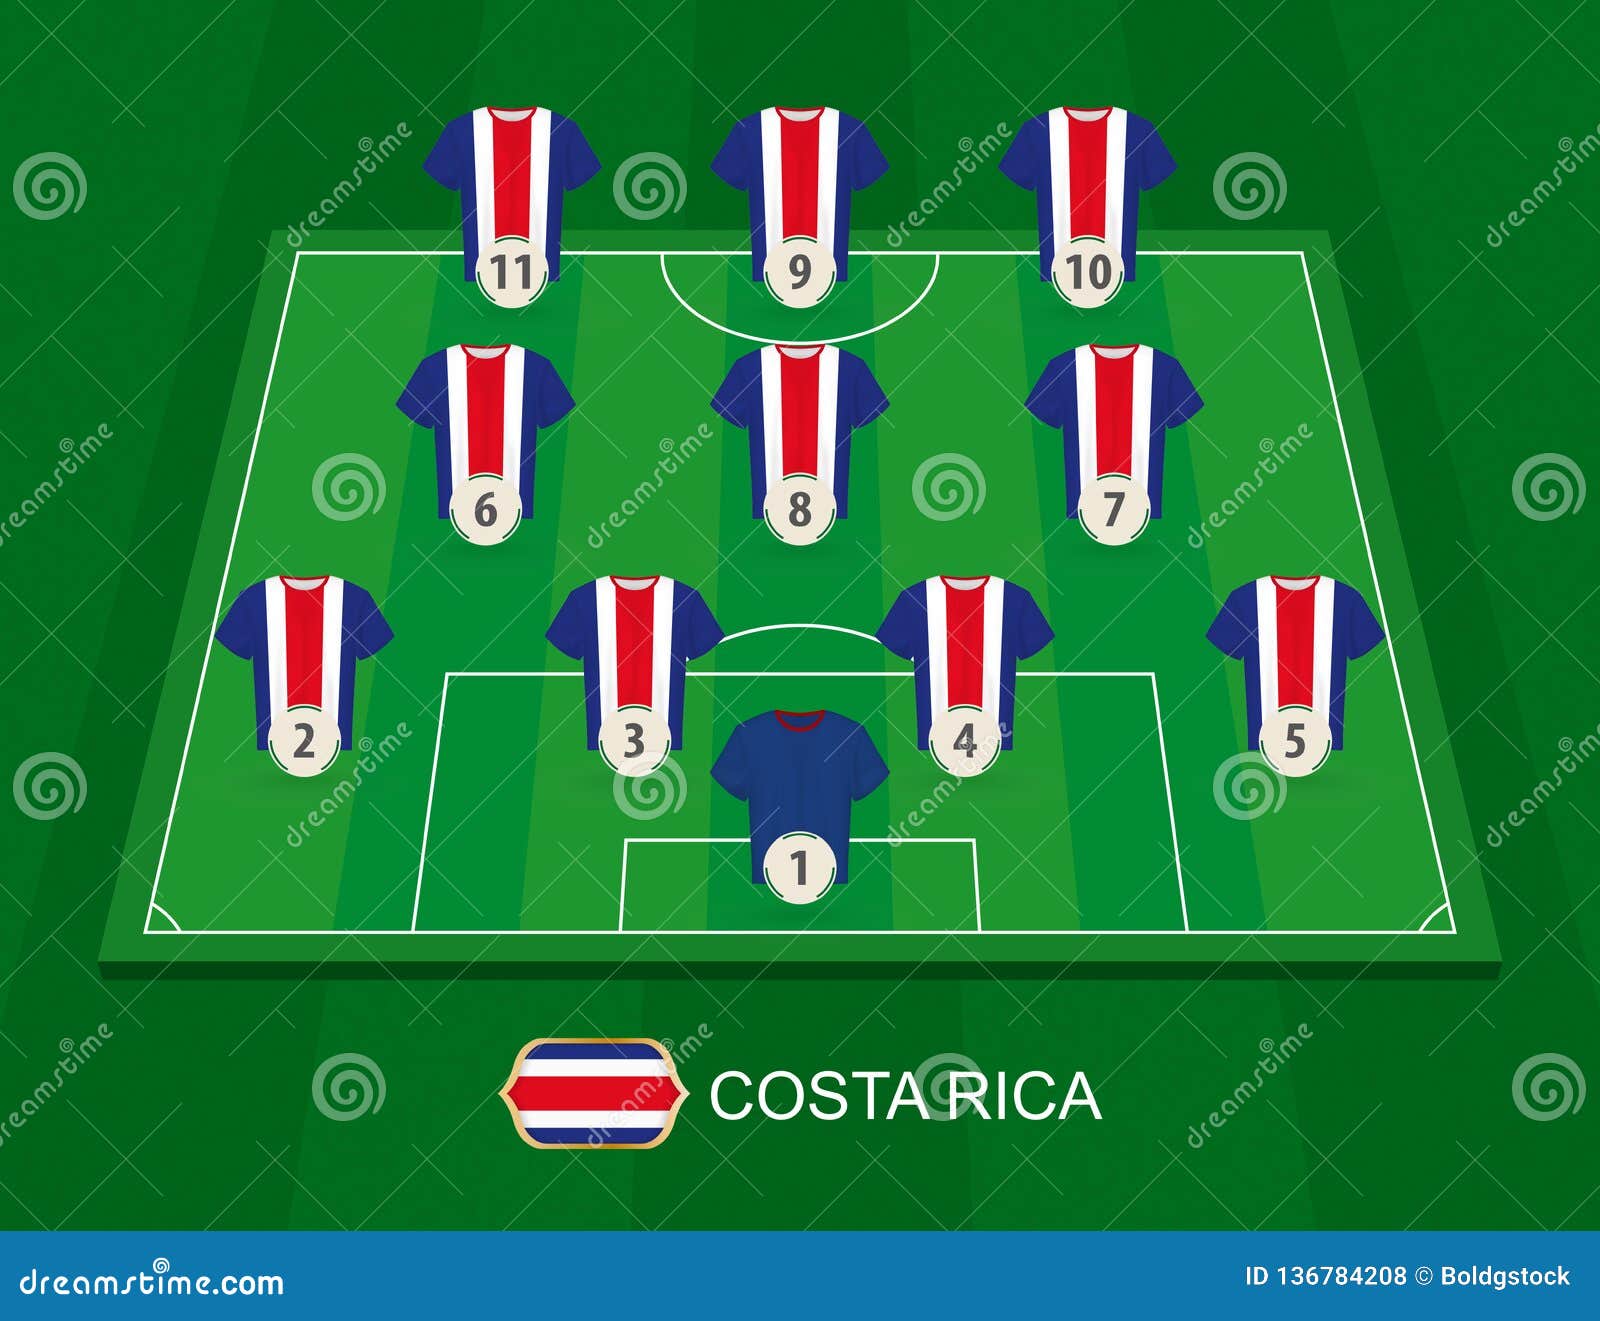 Costa rica national football team